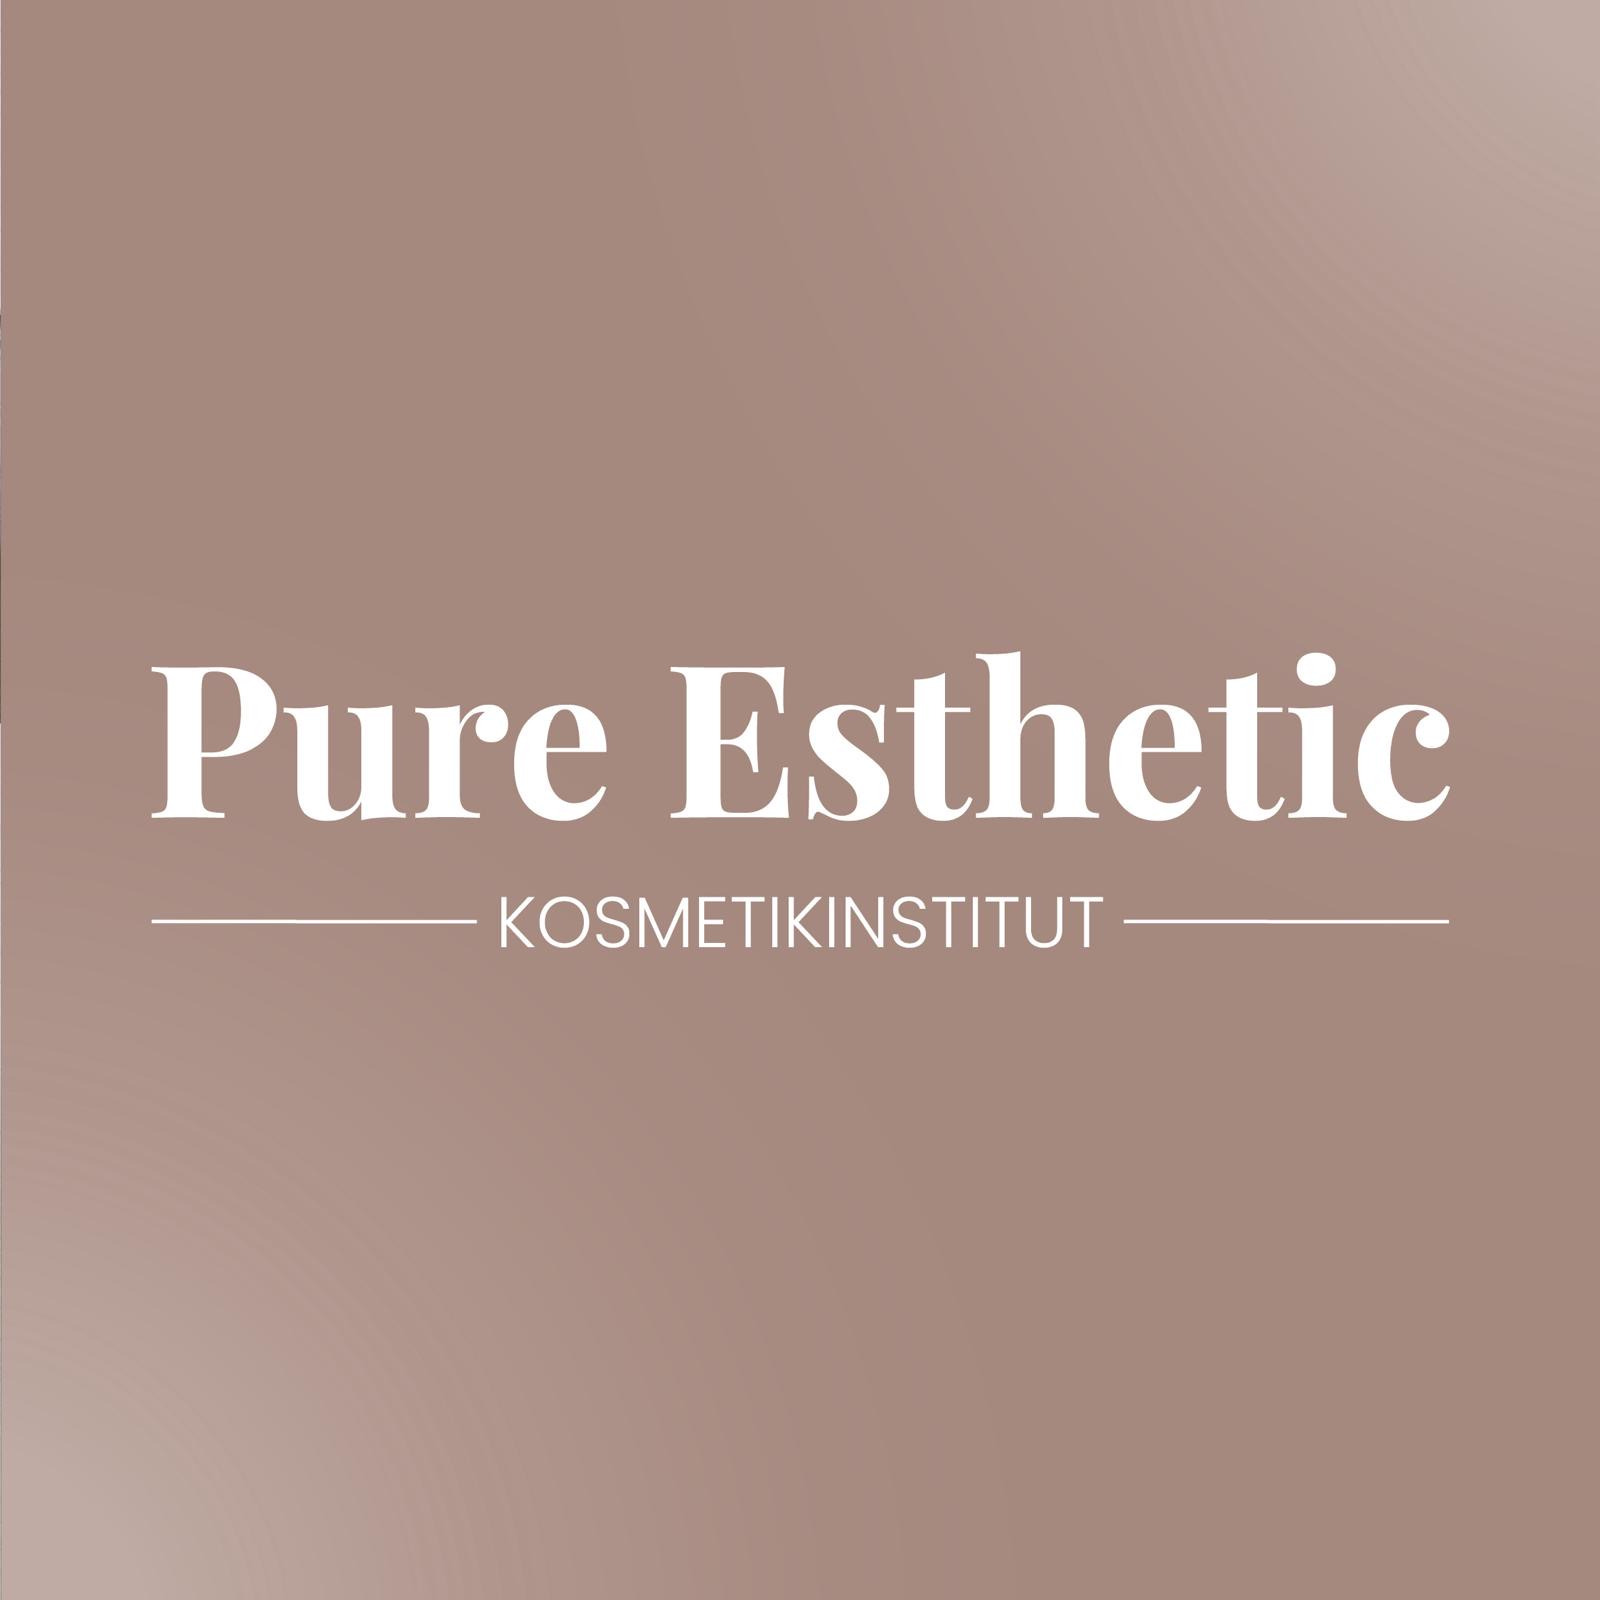 Pure Esthetic Kosmetikinstitut in Hofheim am Taunus - Logo